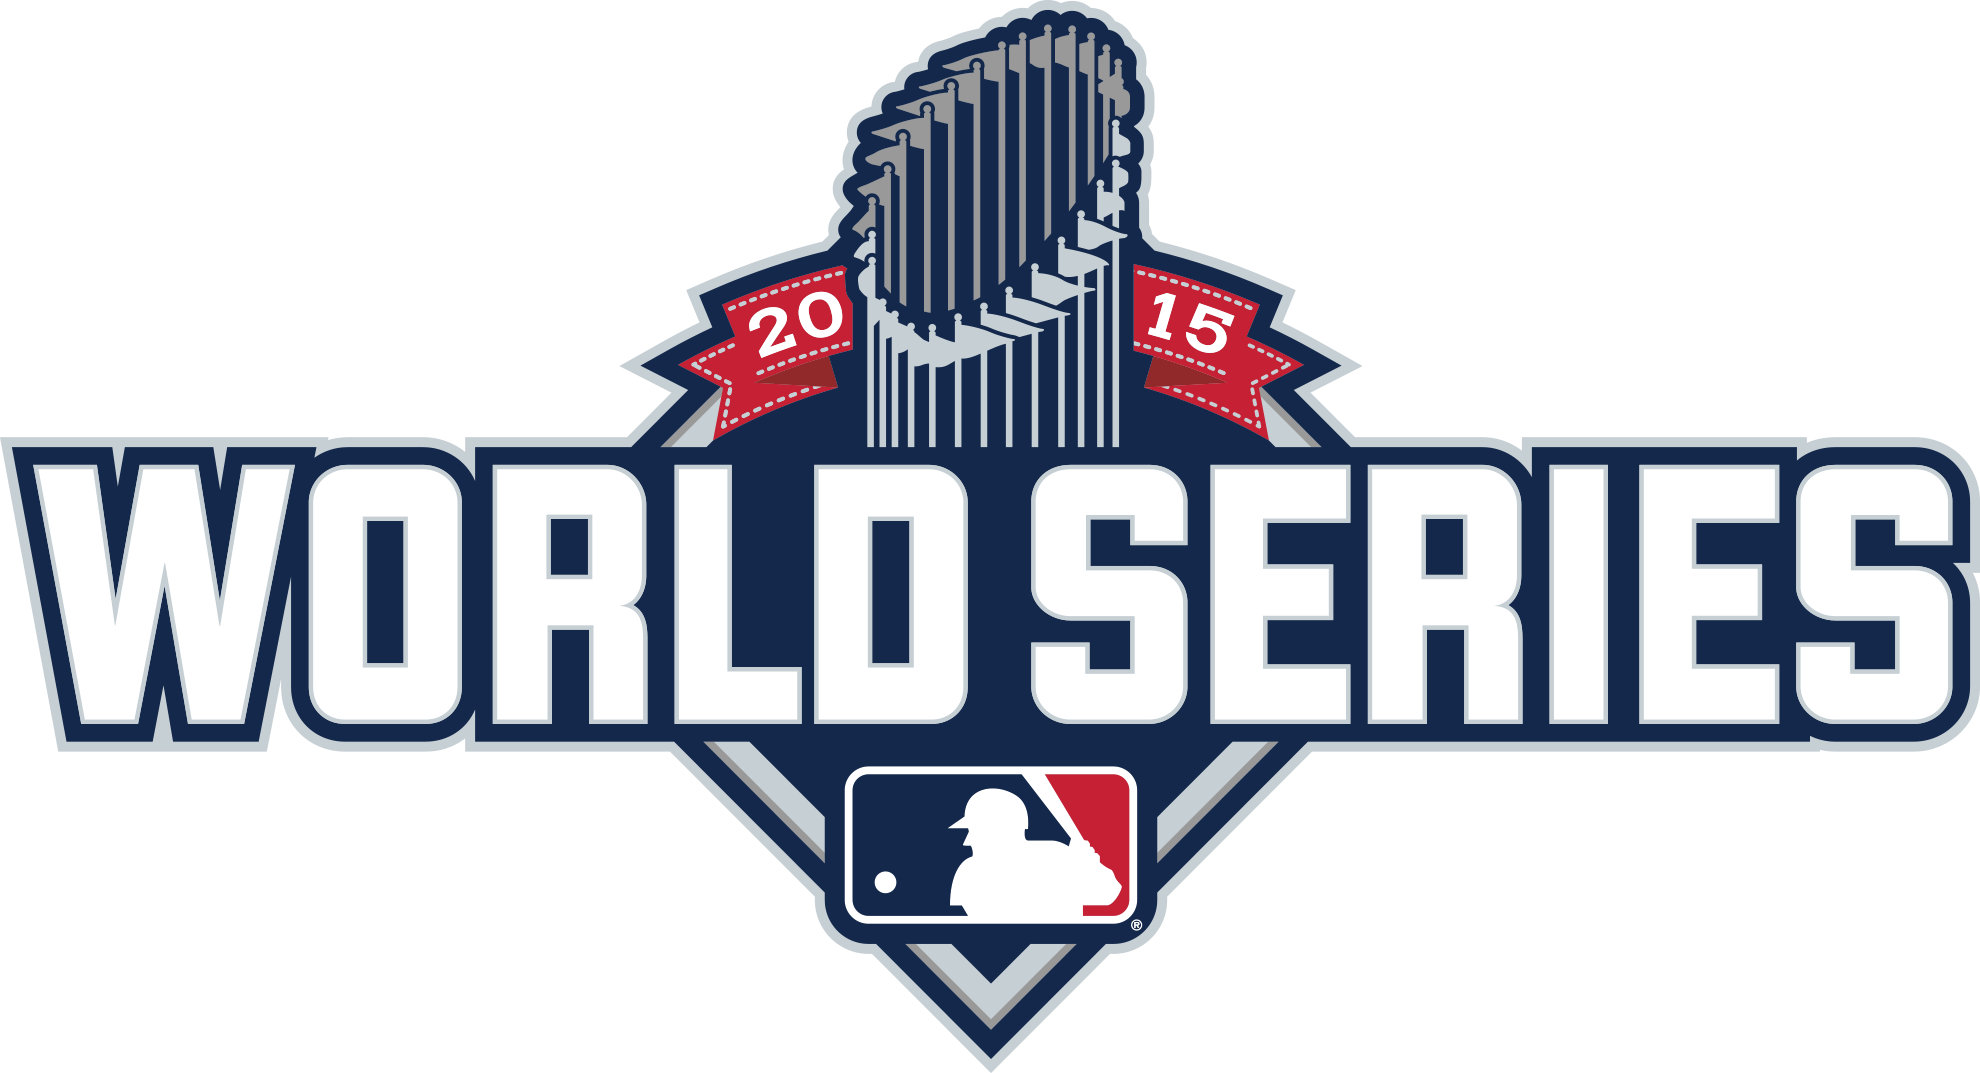 1980 X 1073 2 0 - 2015 World Series Logo (1980x1073)